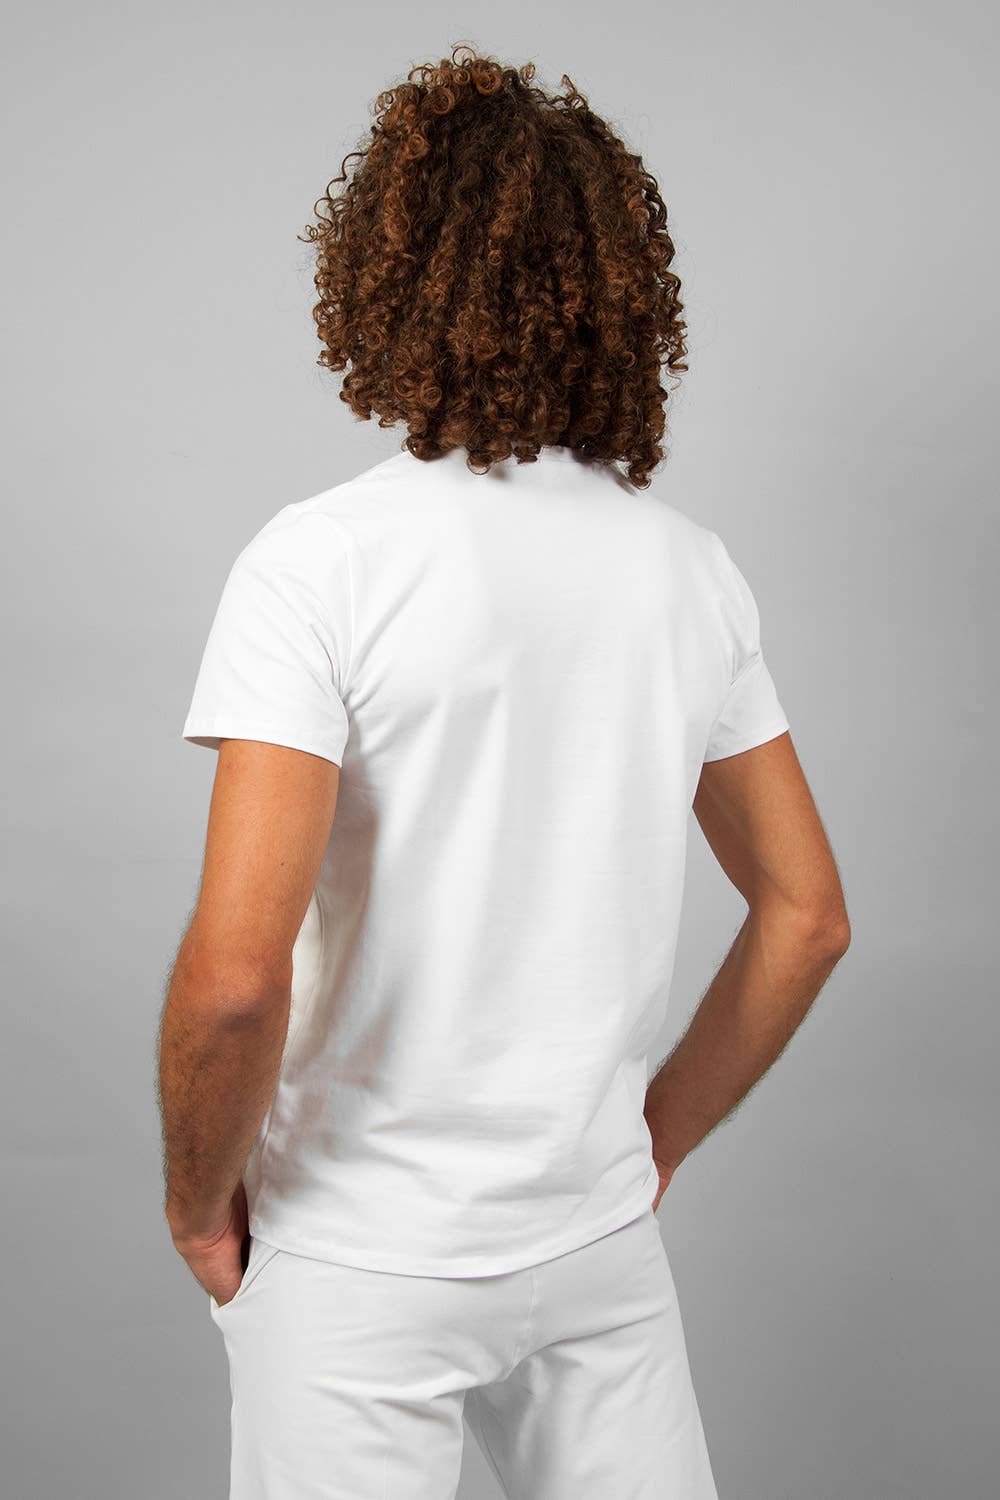 Sadhak yoga T-shirt - White